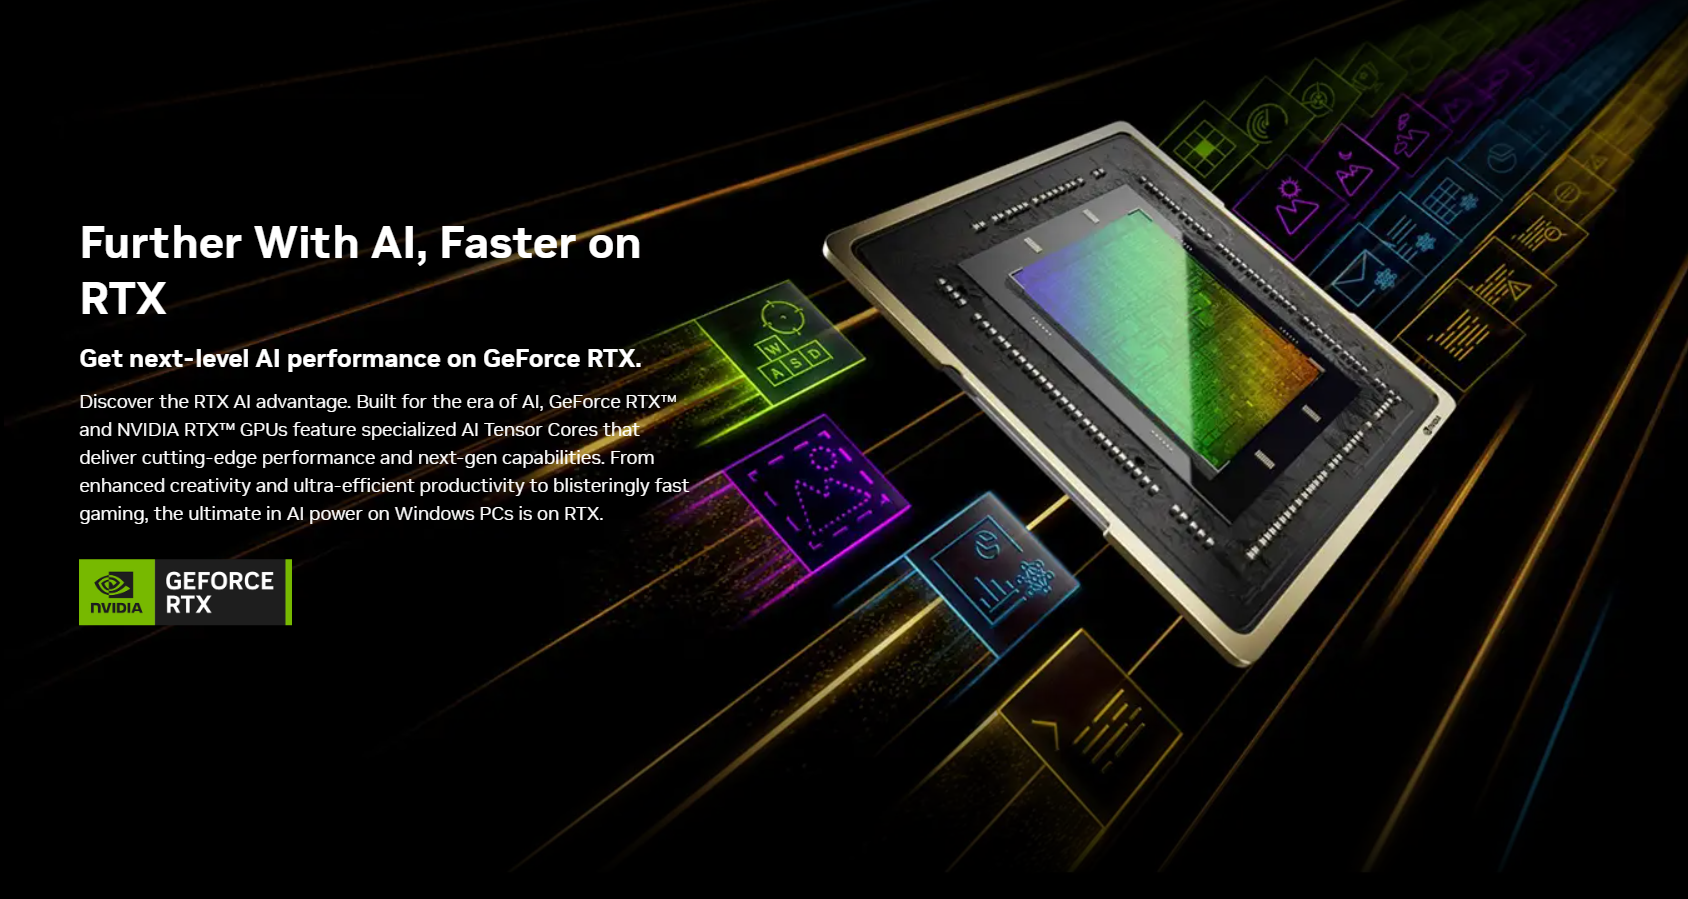 PNY GeForce RTX 4080 XLR8 Gaming VERTO EPIC-X RGB OC 16GB